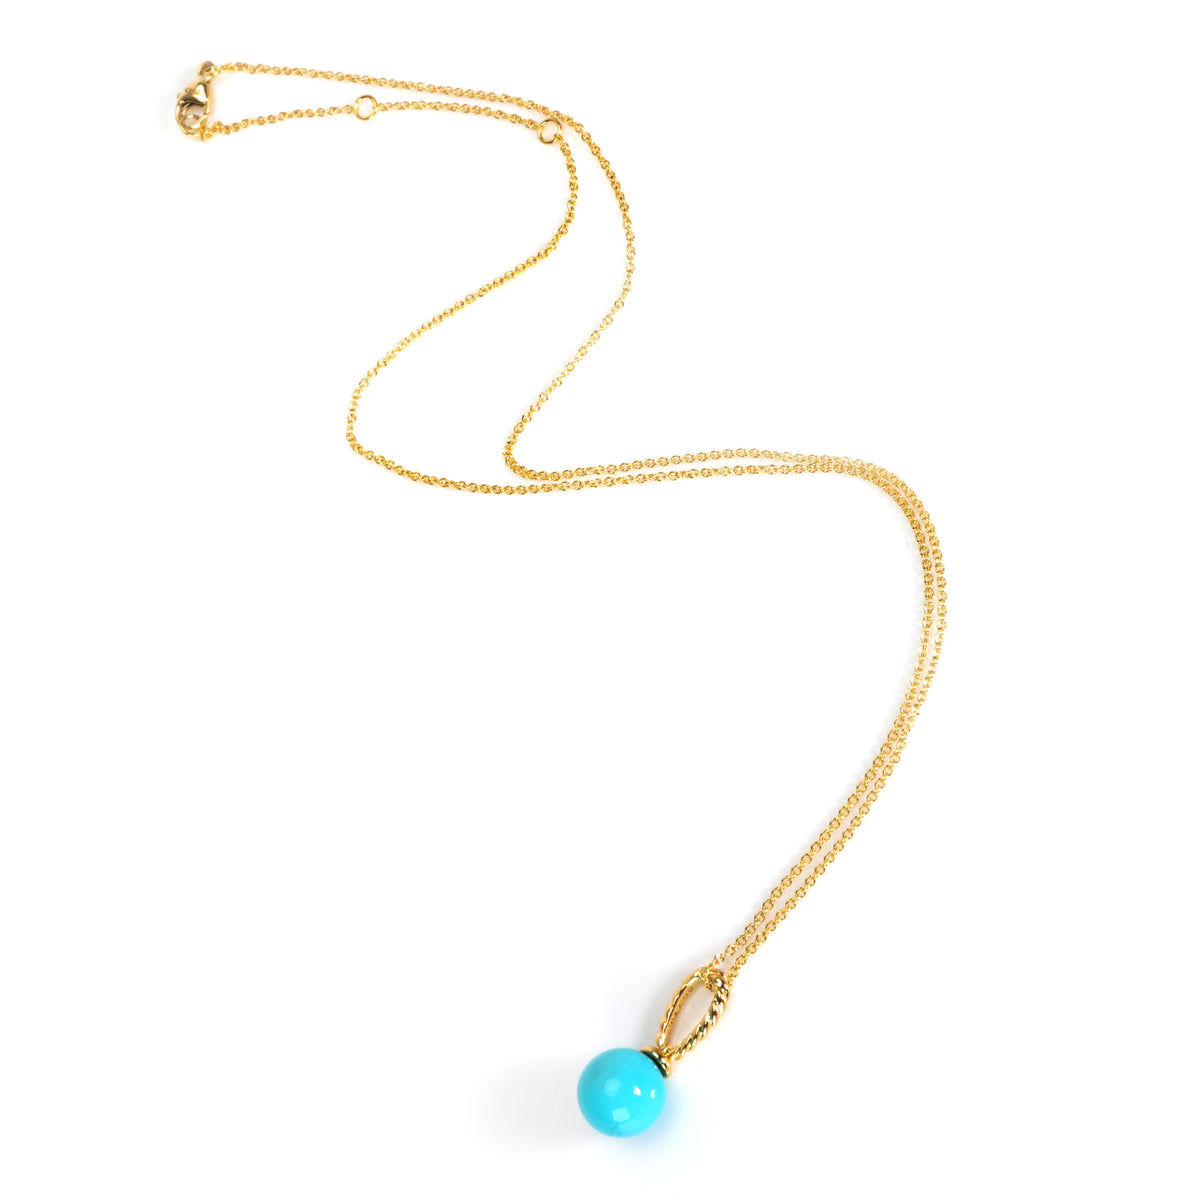 David Yurman Solari Turquoise Necklace in 18K Yellow Gold